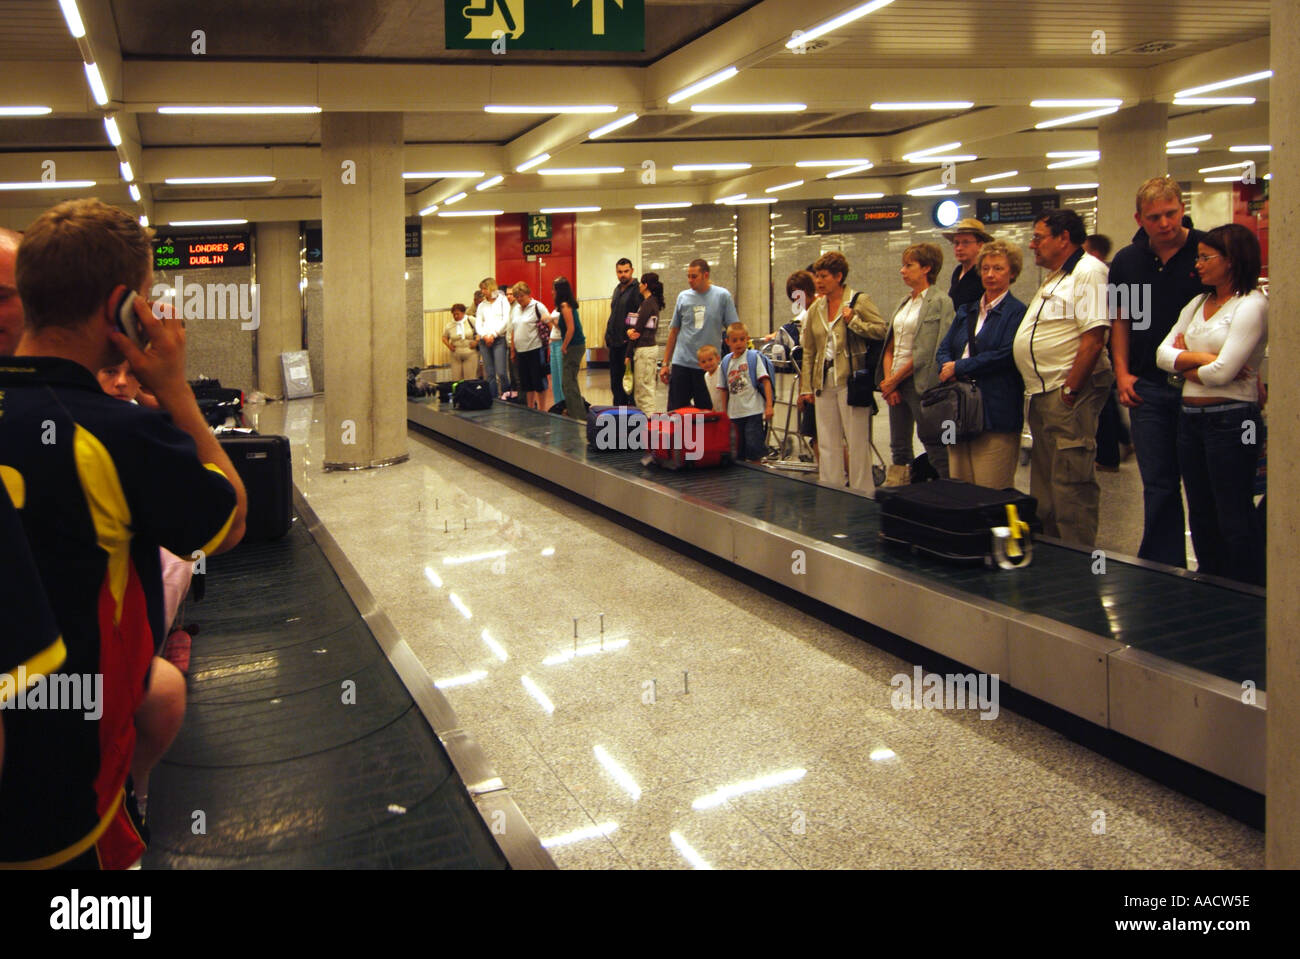 Palma airport luggage carousel passengers waiting to retrieve suitcases Stock Photo